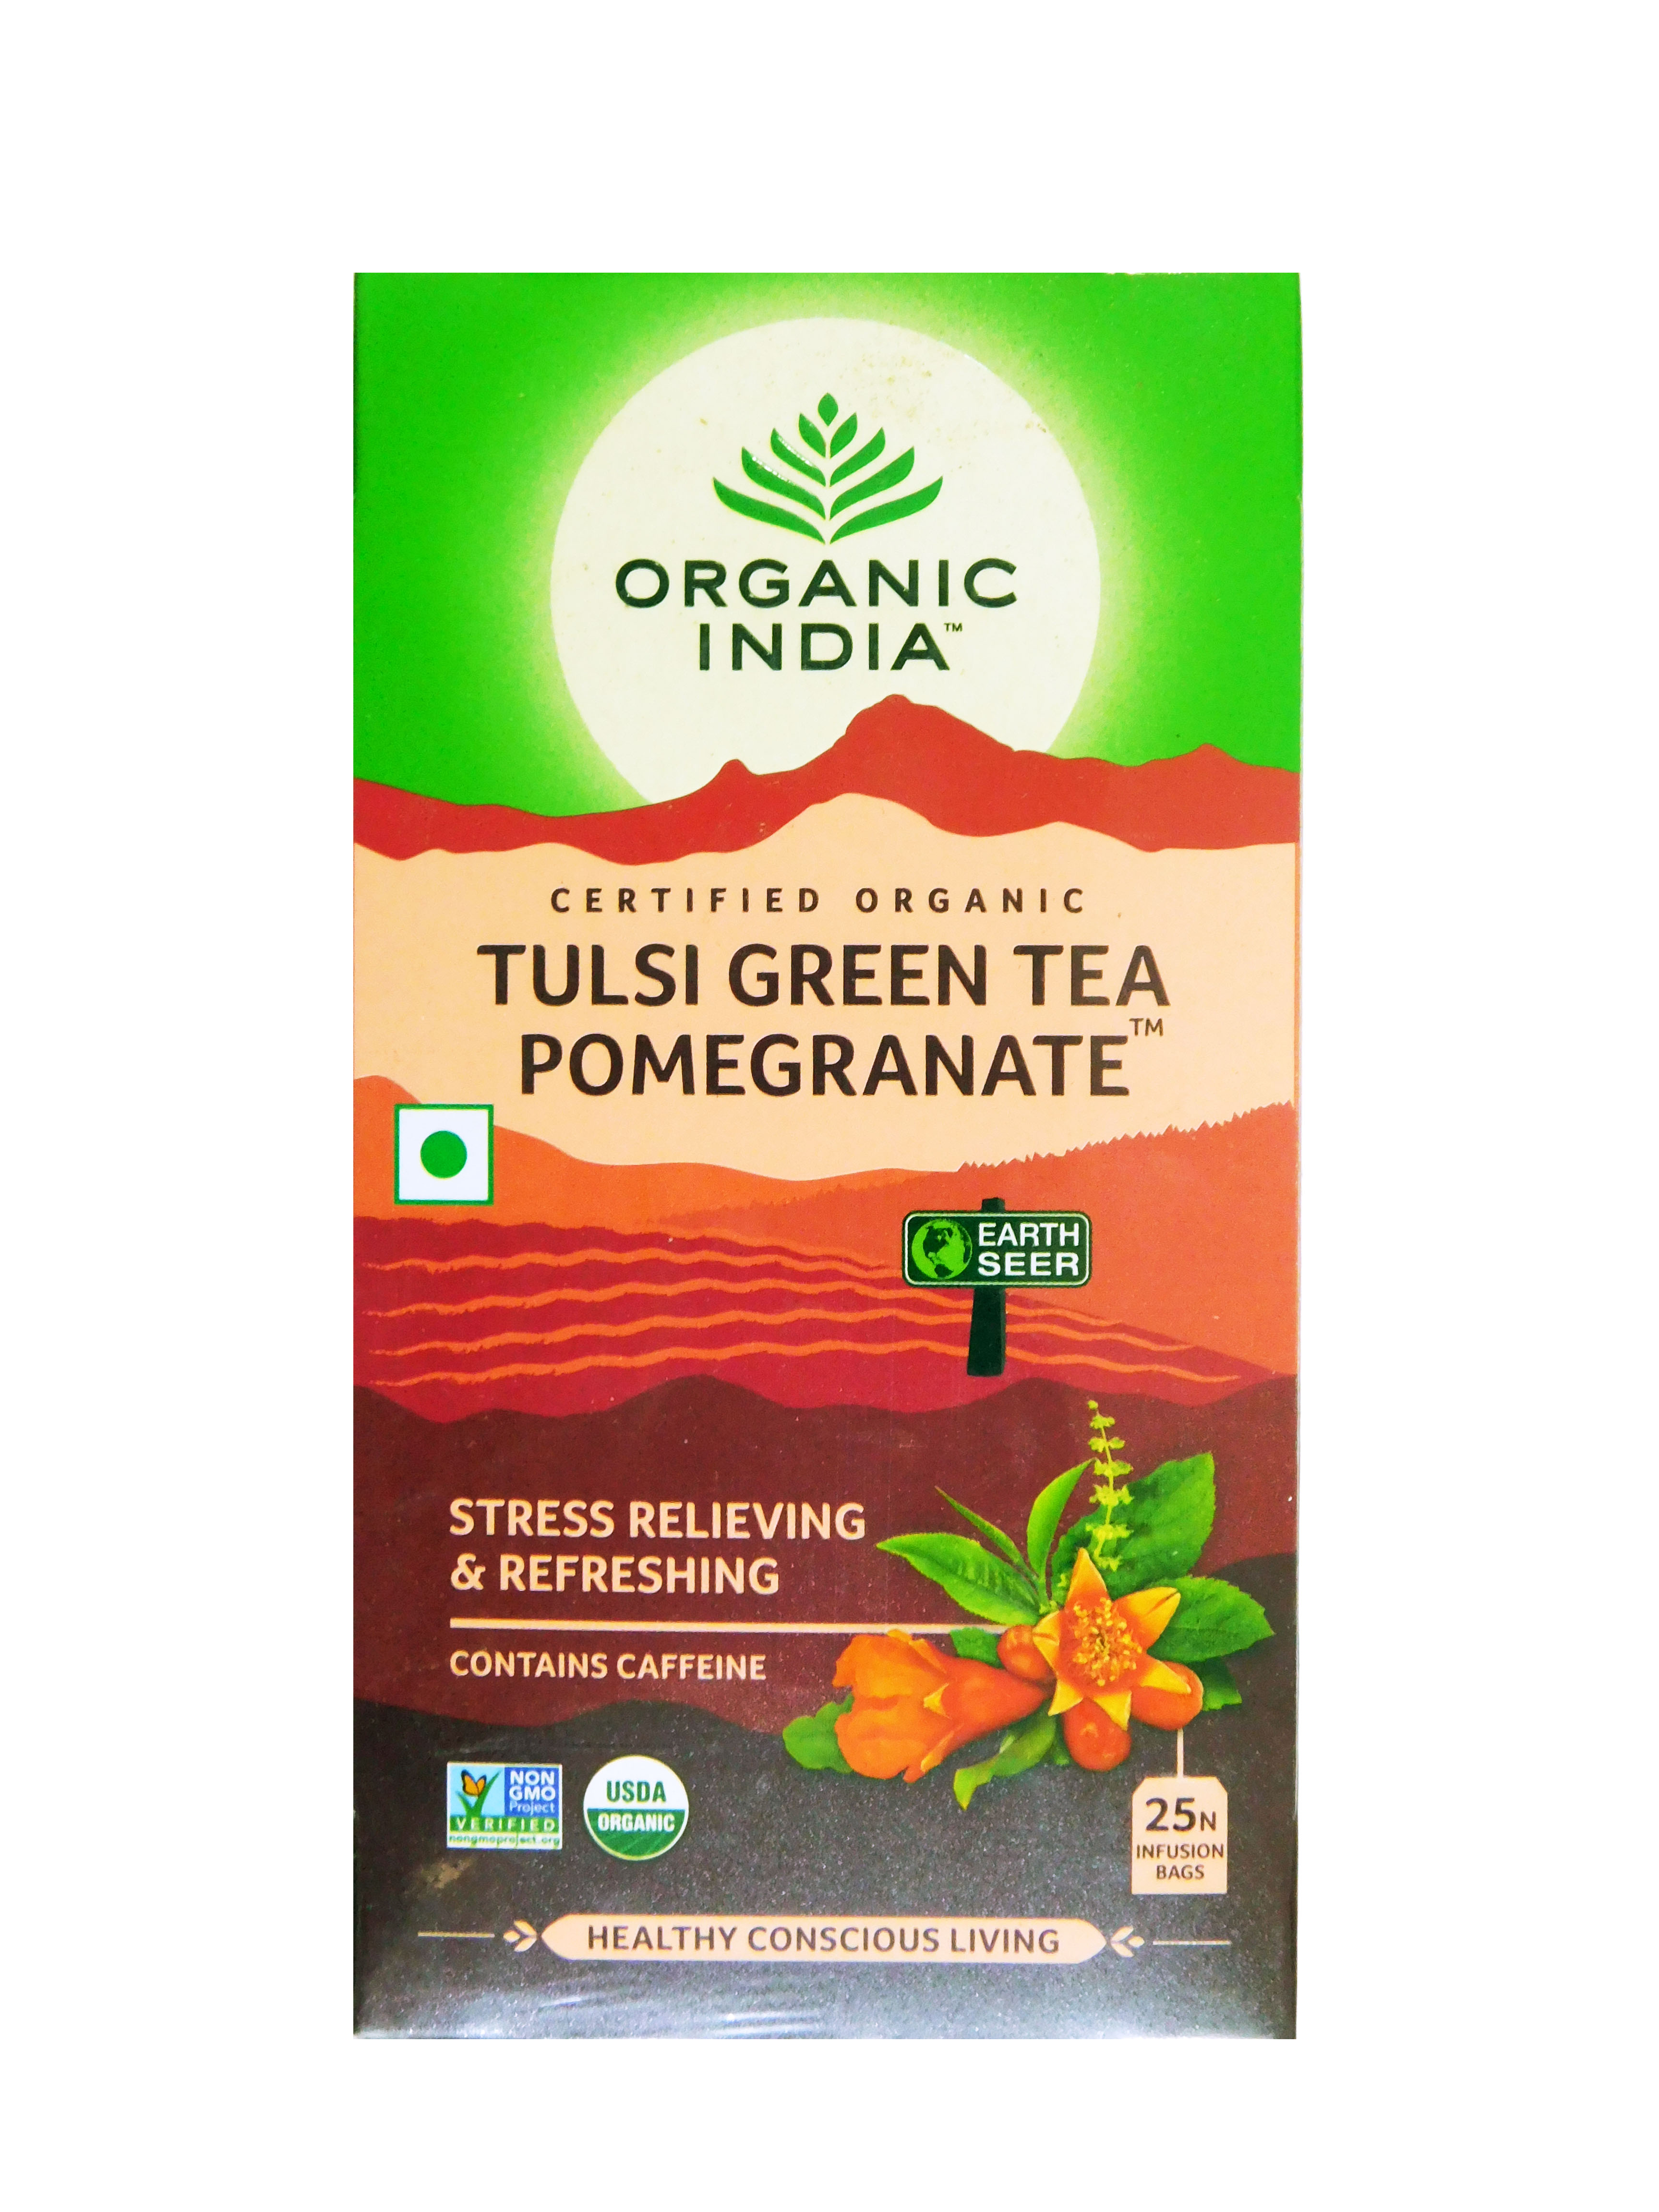 Buy Organic India Tulsi Green Tea Pomeogranate at Best Price Online